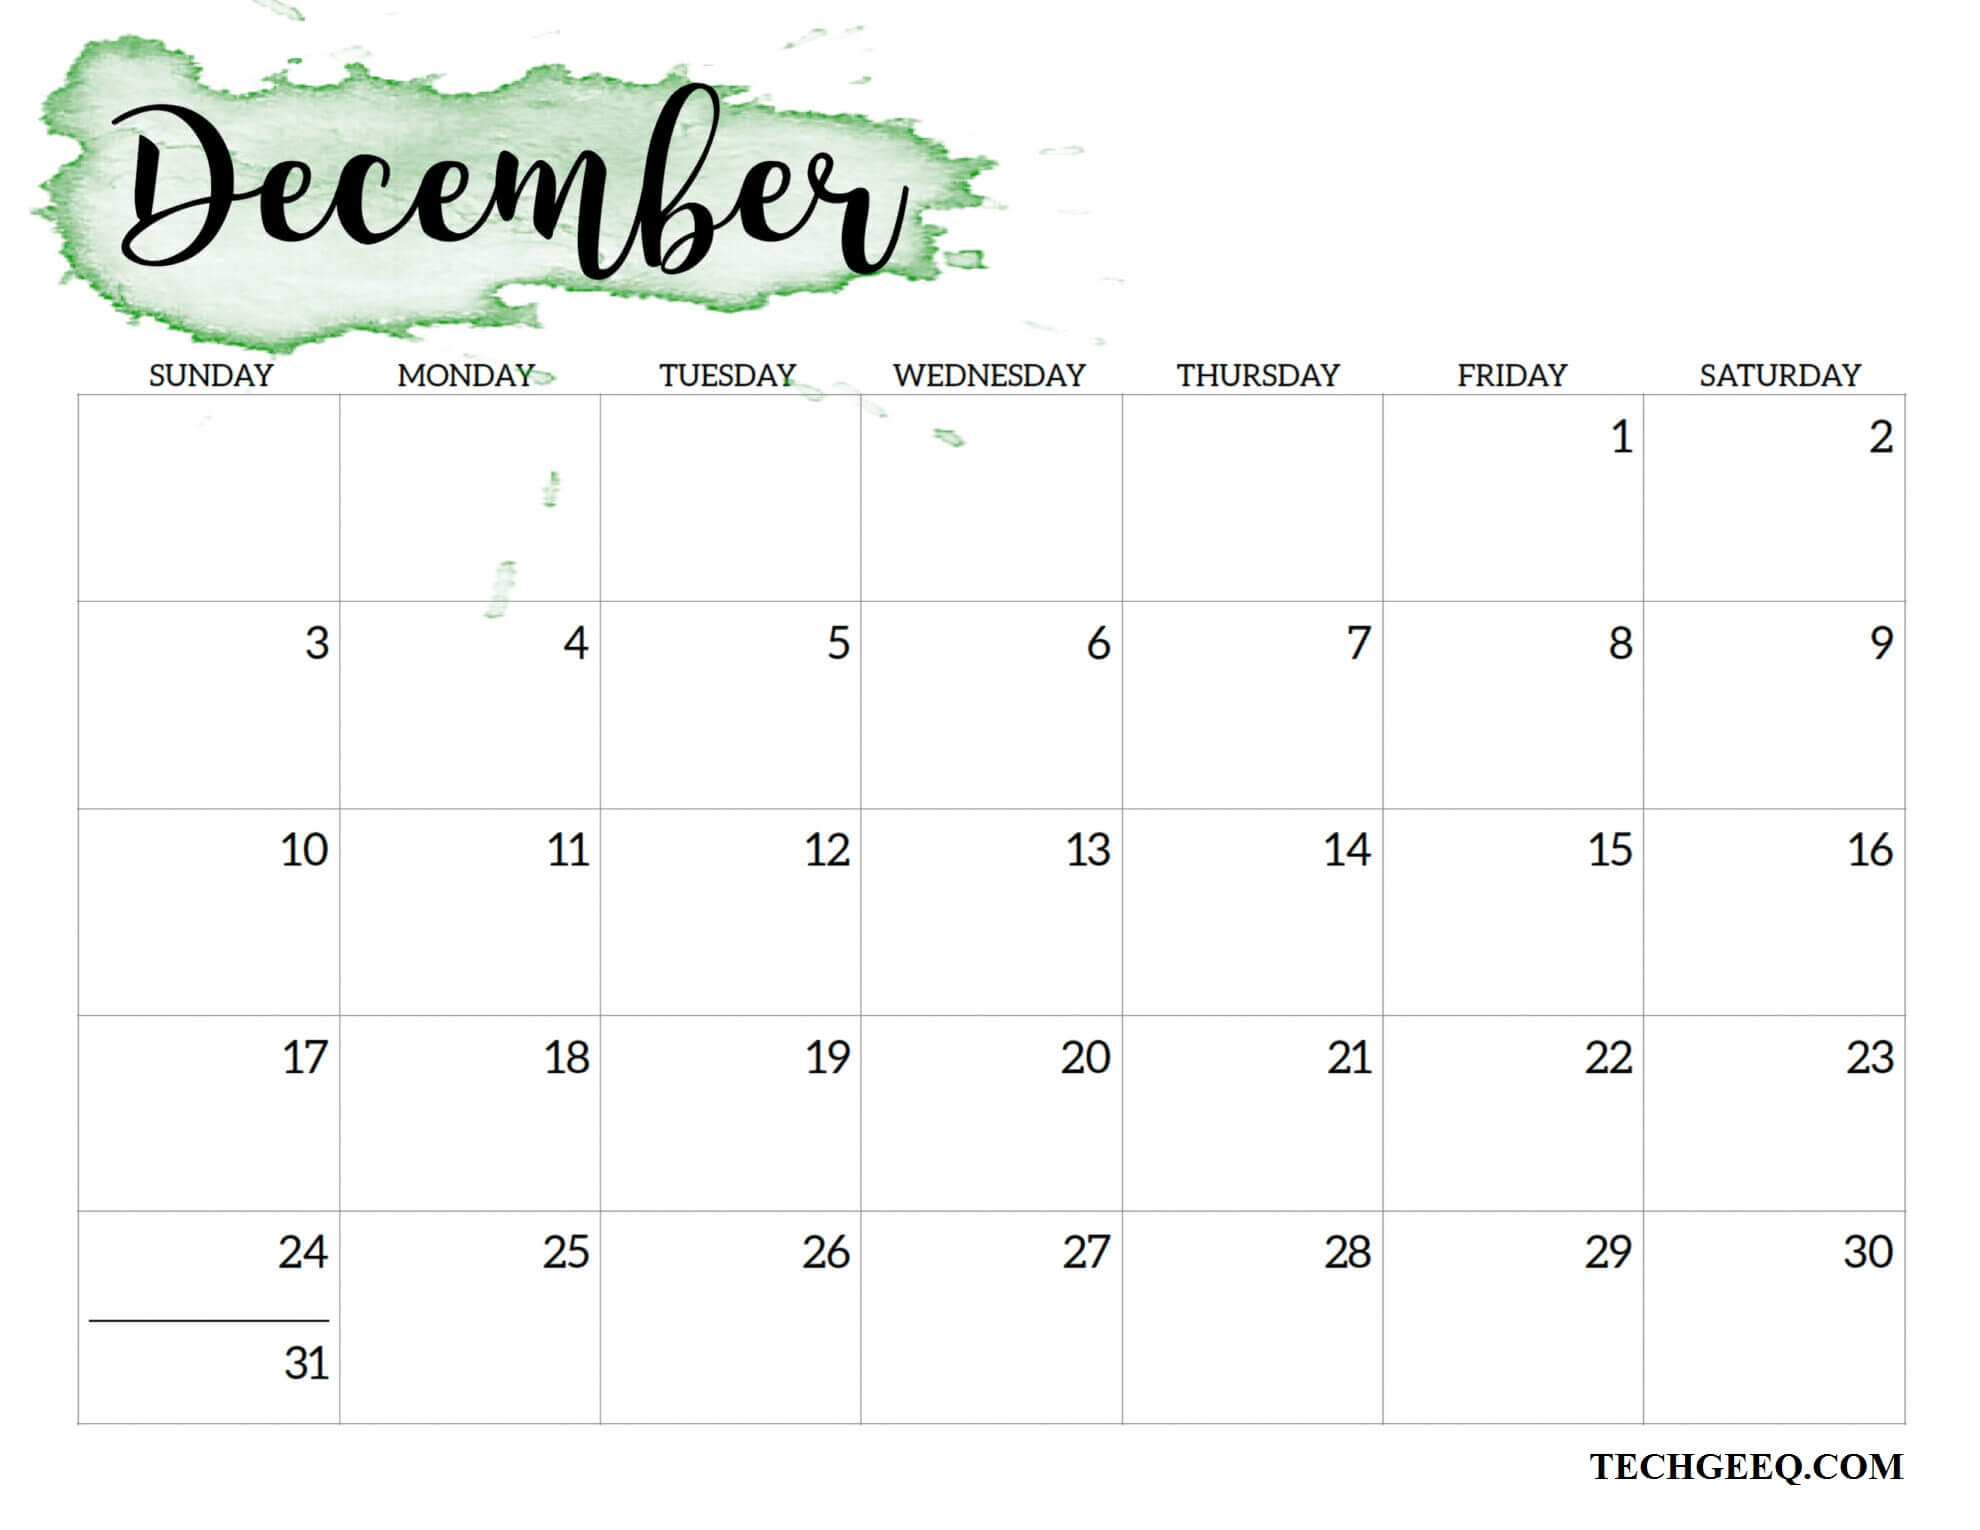 December 2023 Calendar PDF